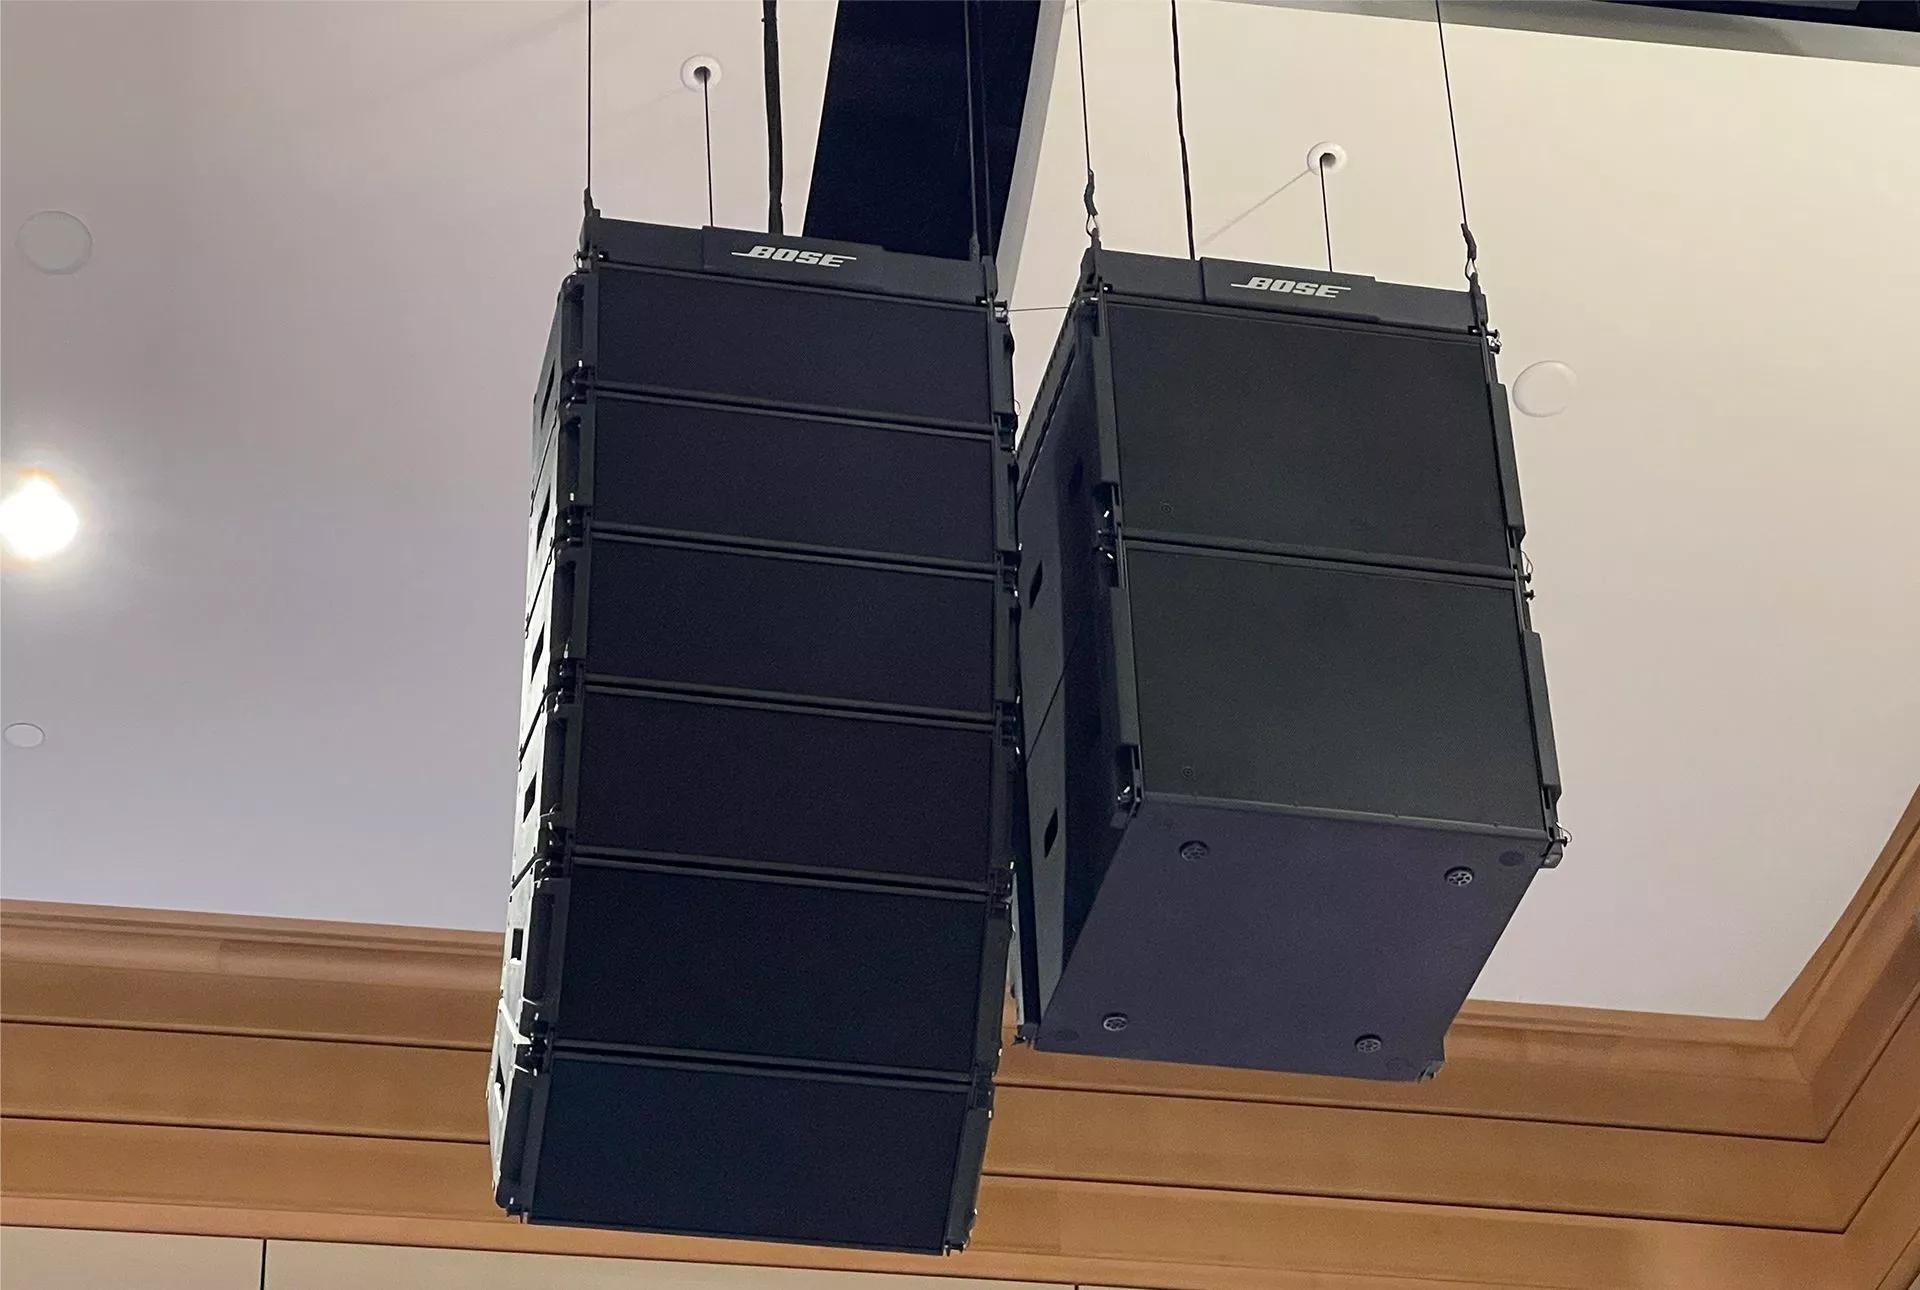 Bose Professional ShowMatch DeltaQ array loudspeakers